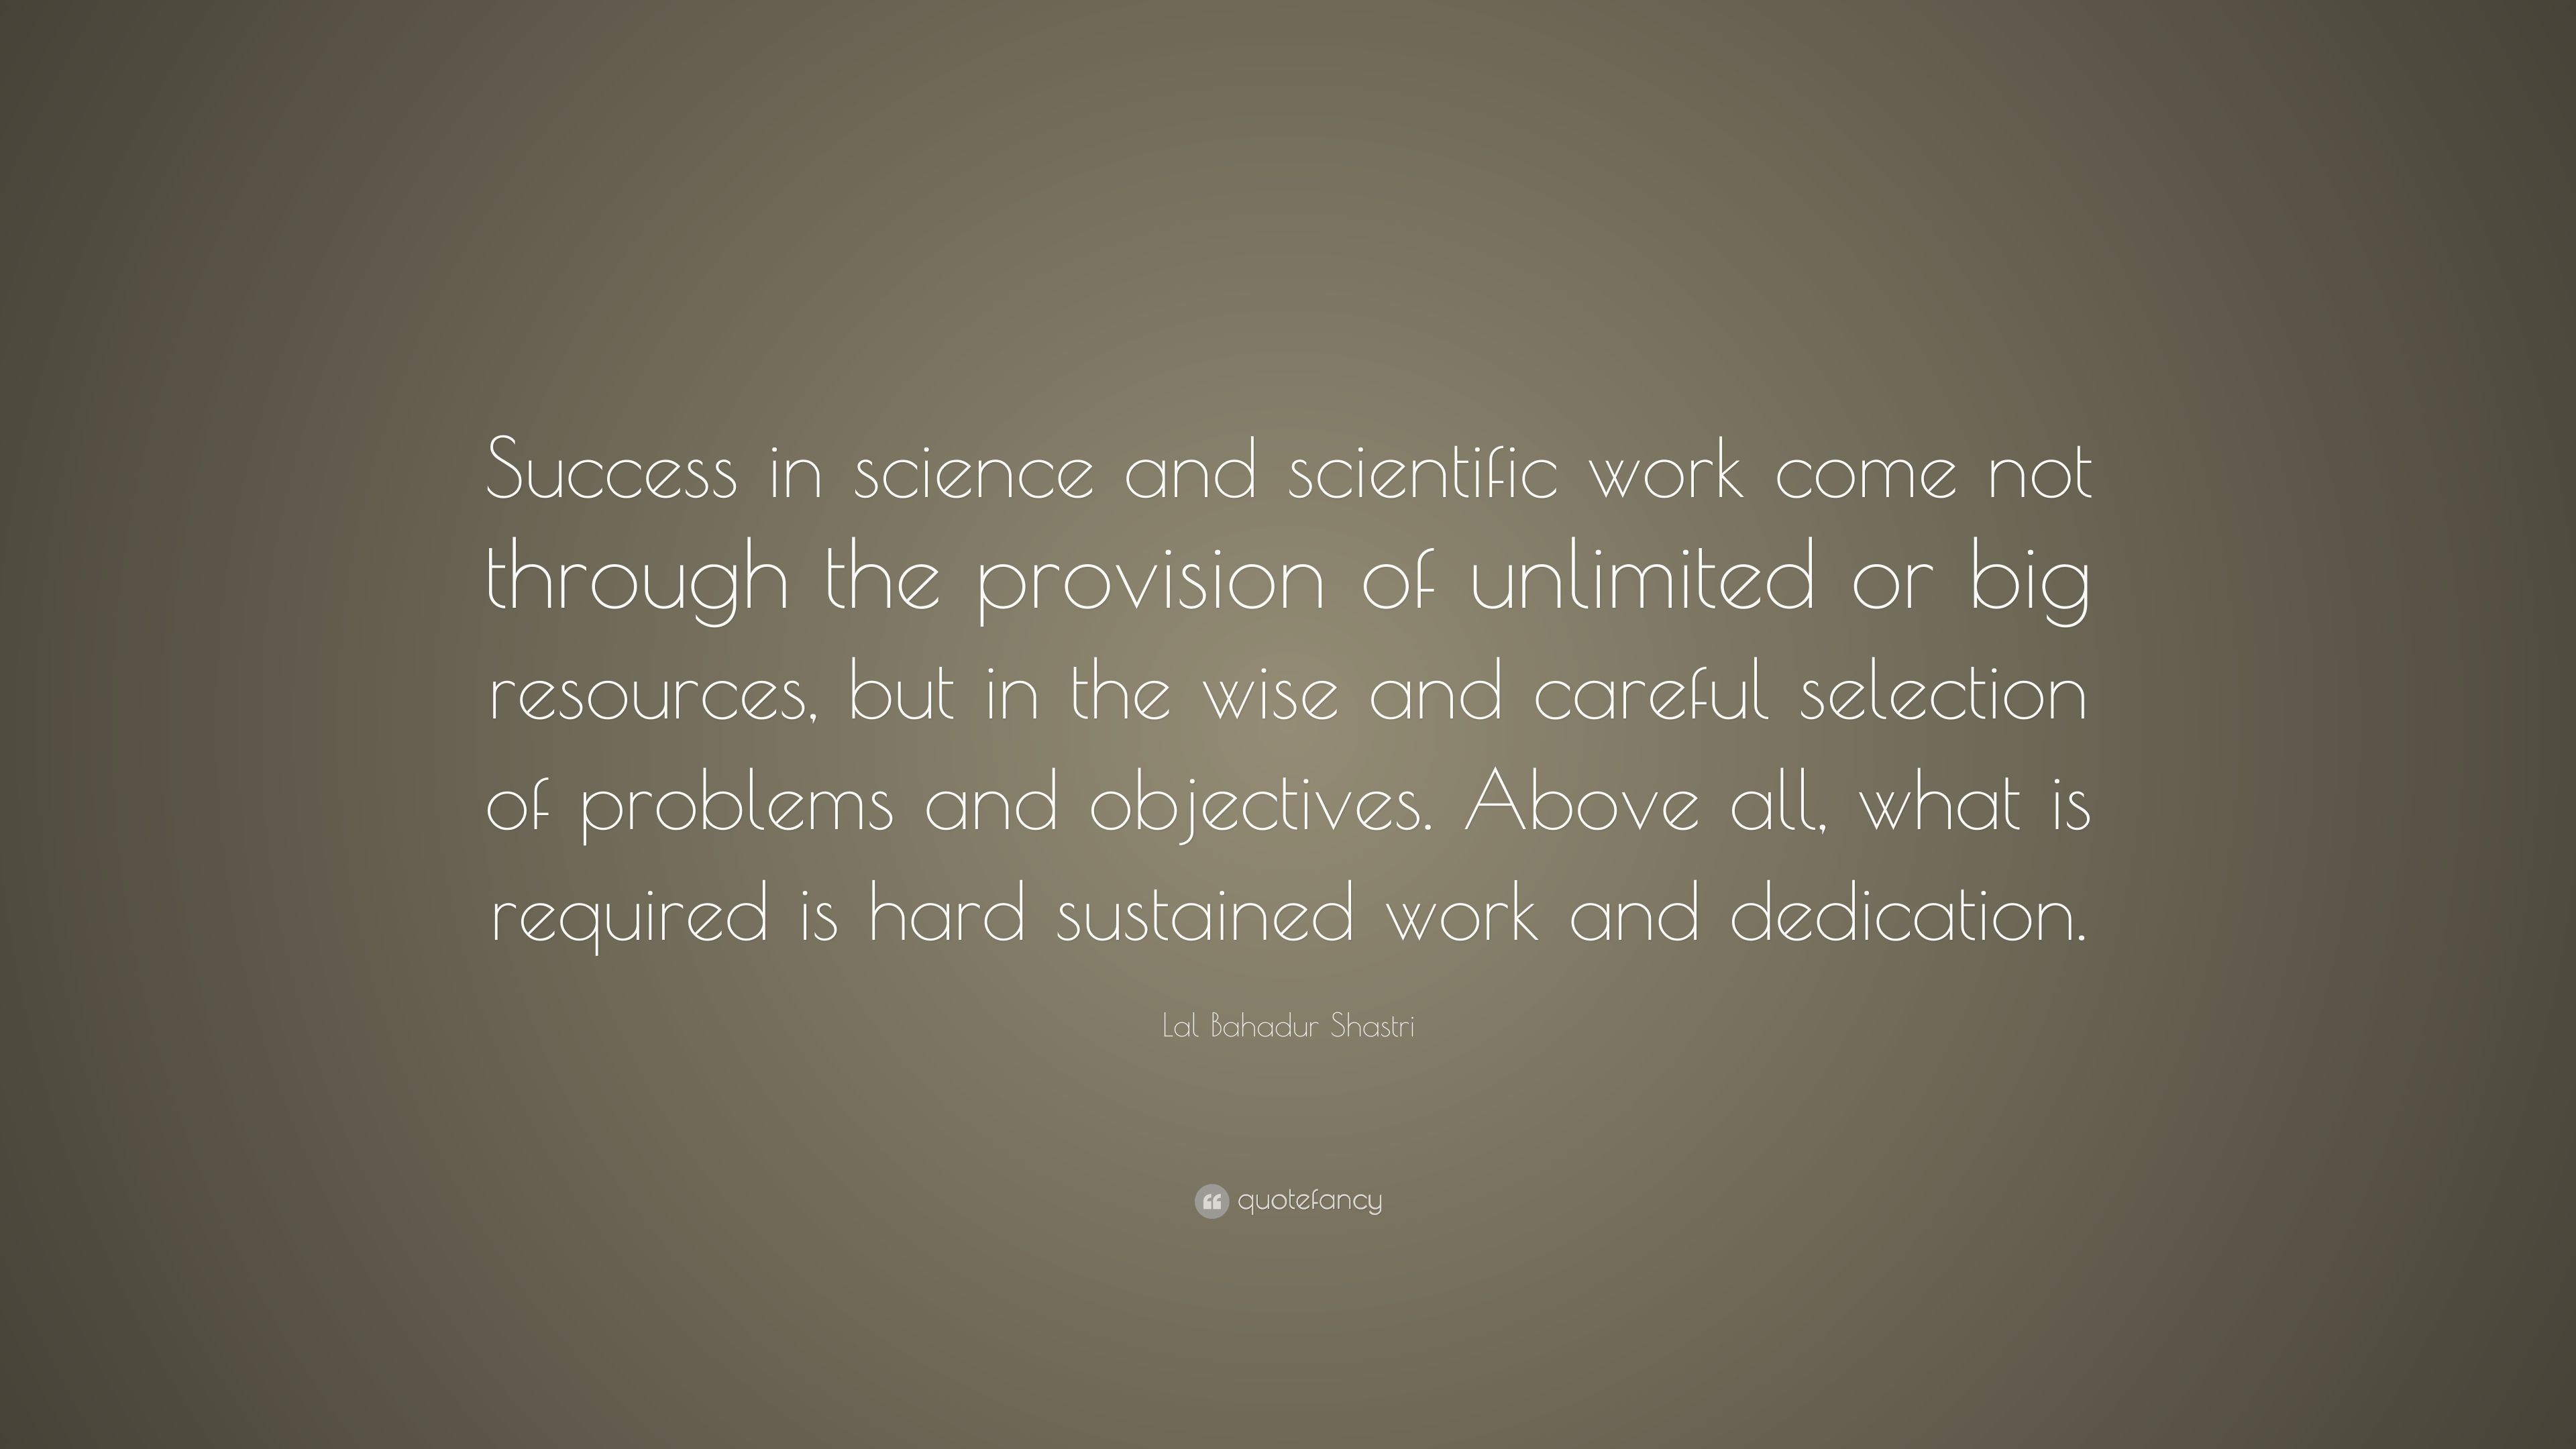 Lal Bahadur Shastri Quote: “Success in science and scientific work